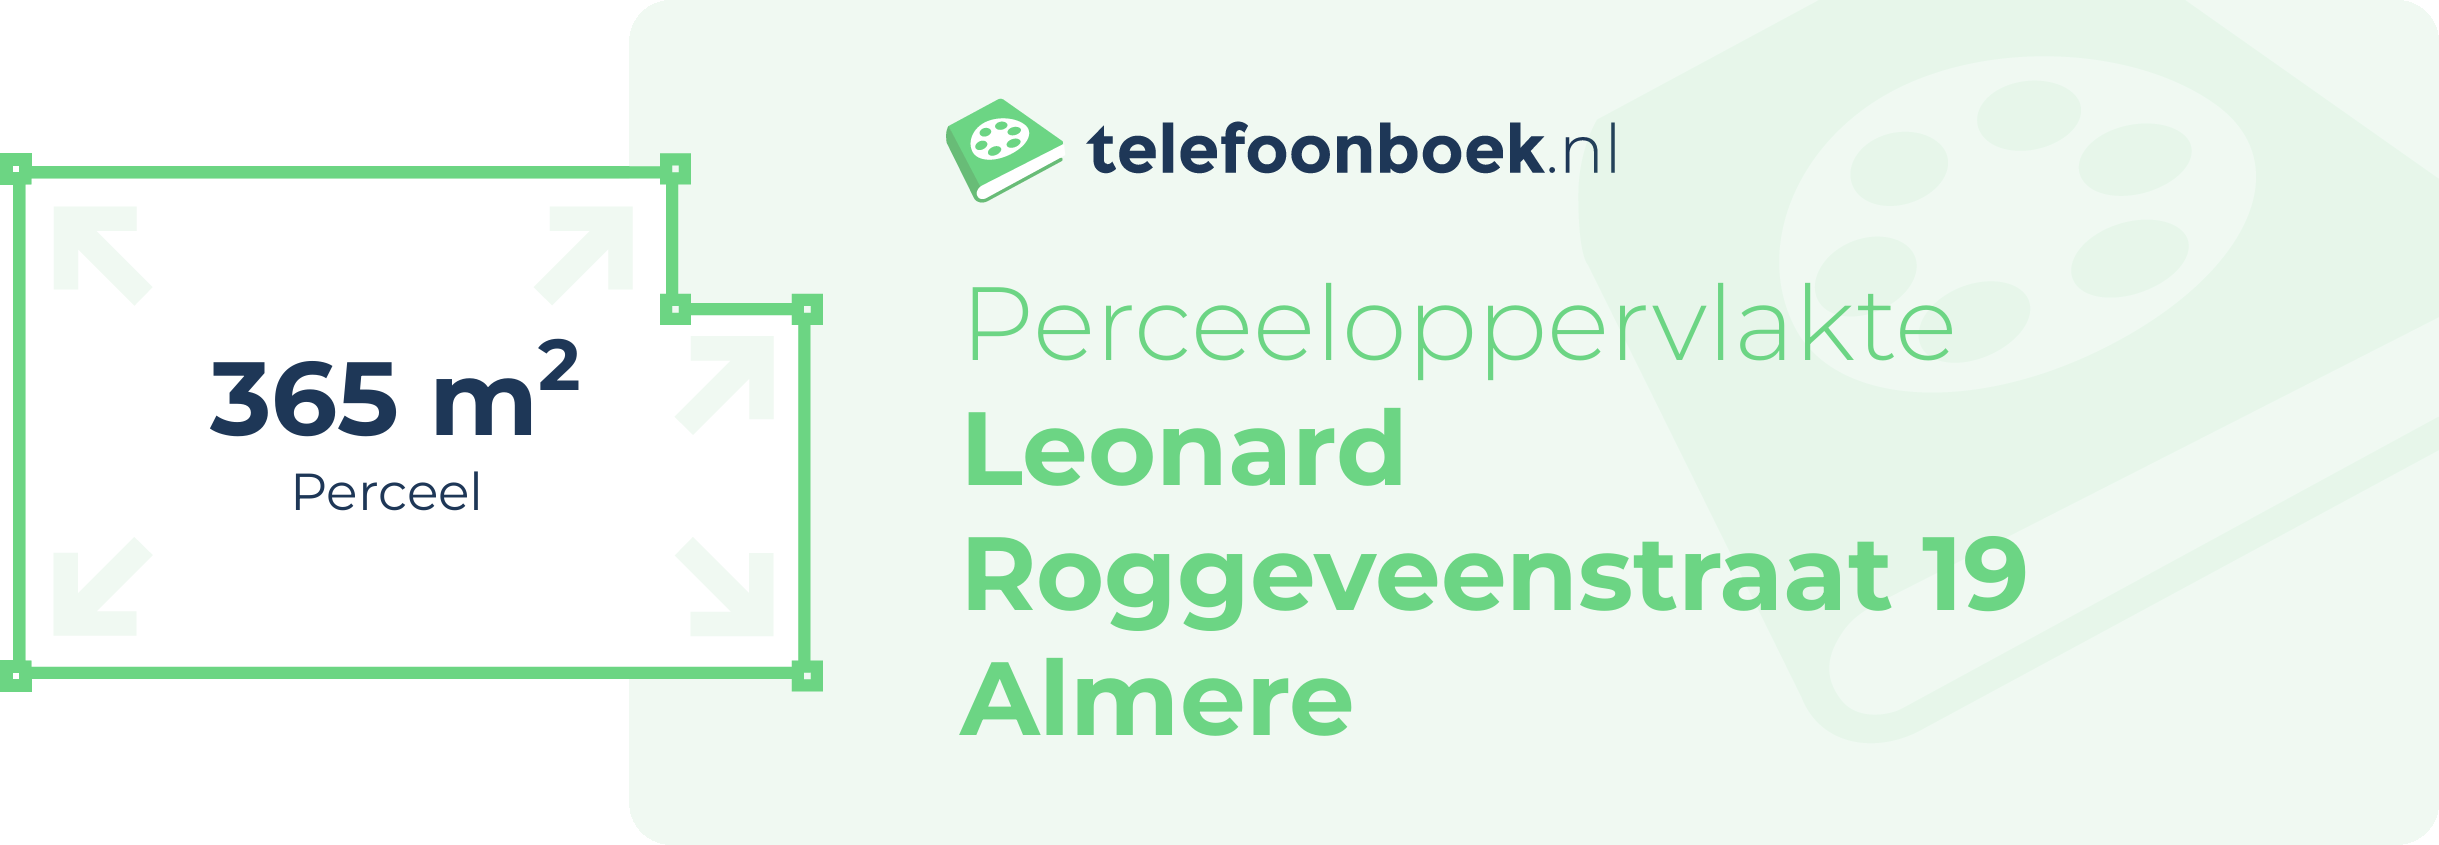 Perceeloppervlakte Leonard Roggeveenstraat 19 Almere